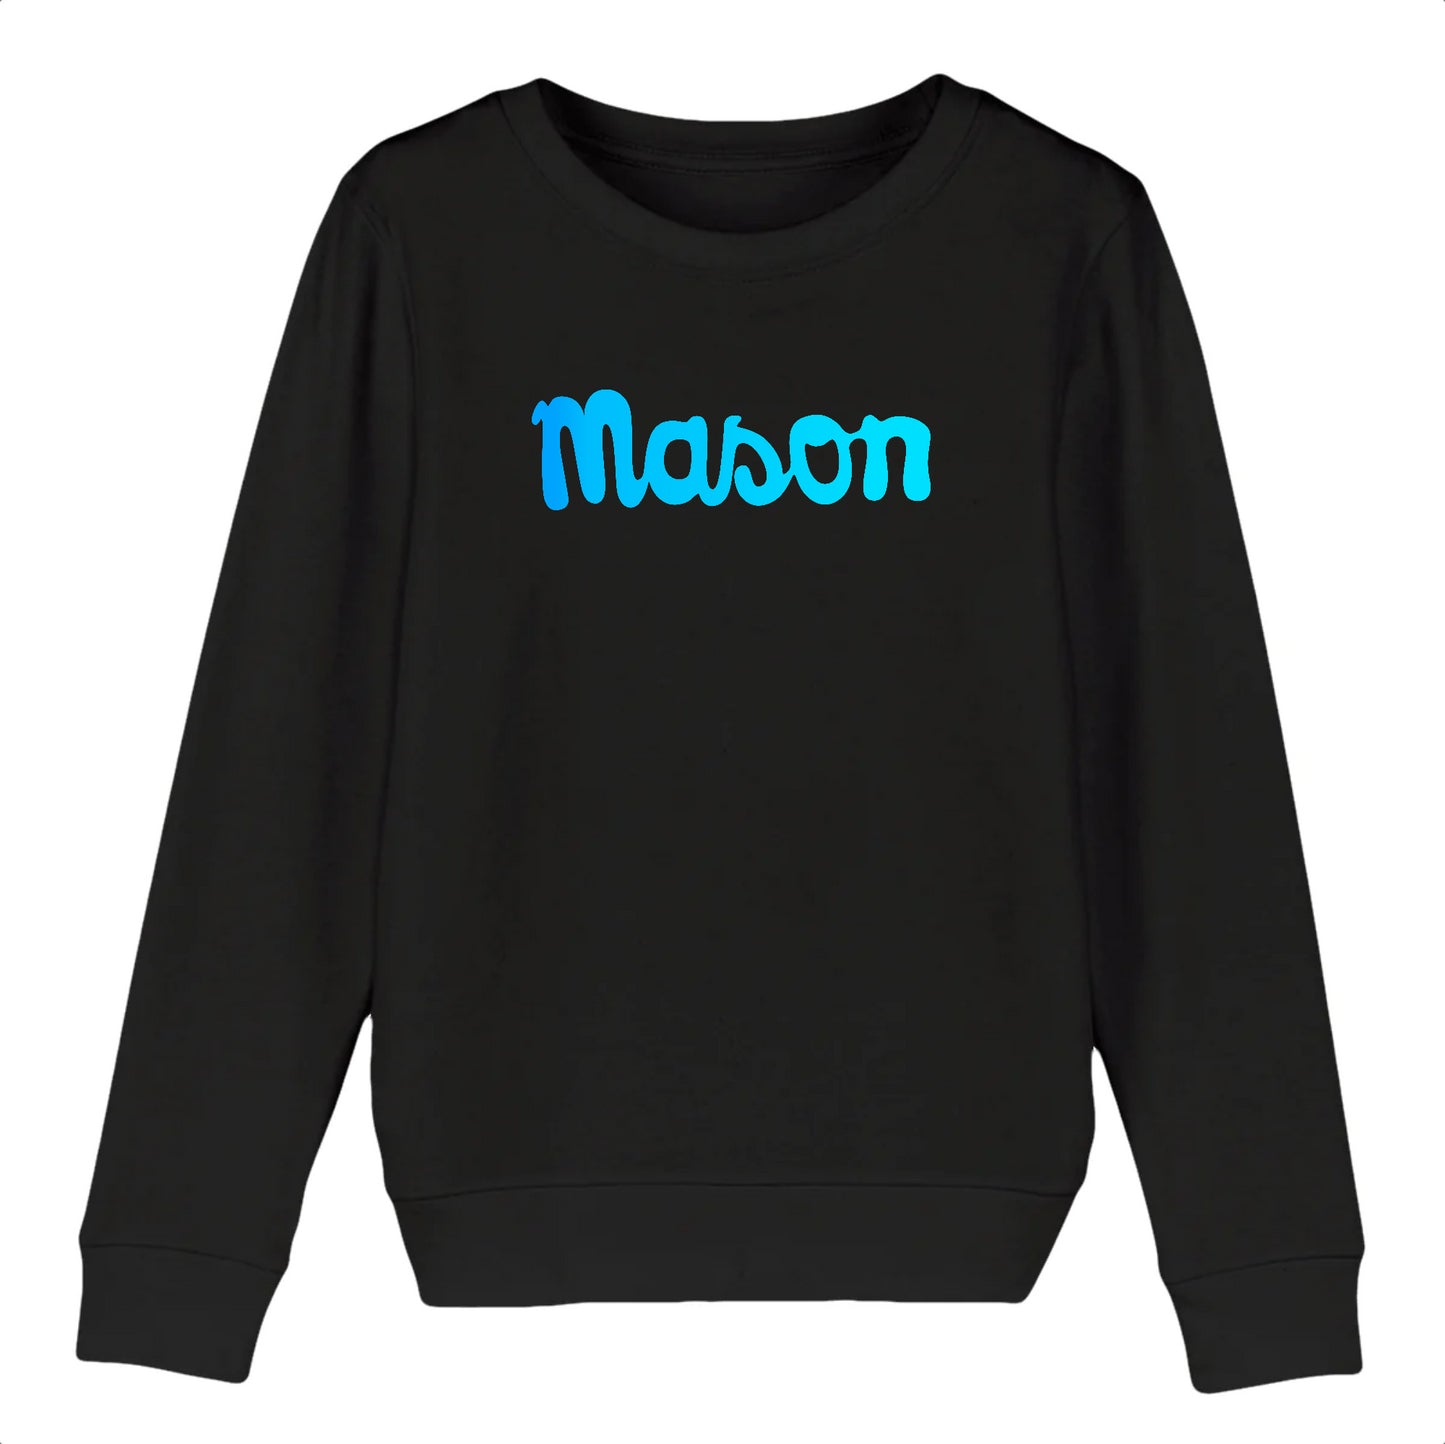 Mason Blue Fade Sweater Kids